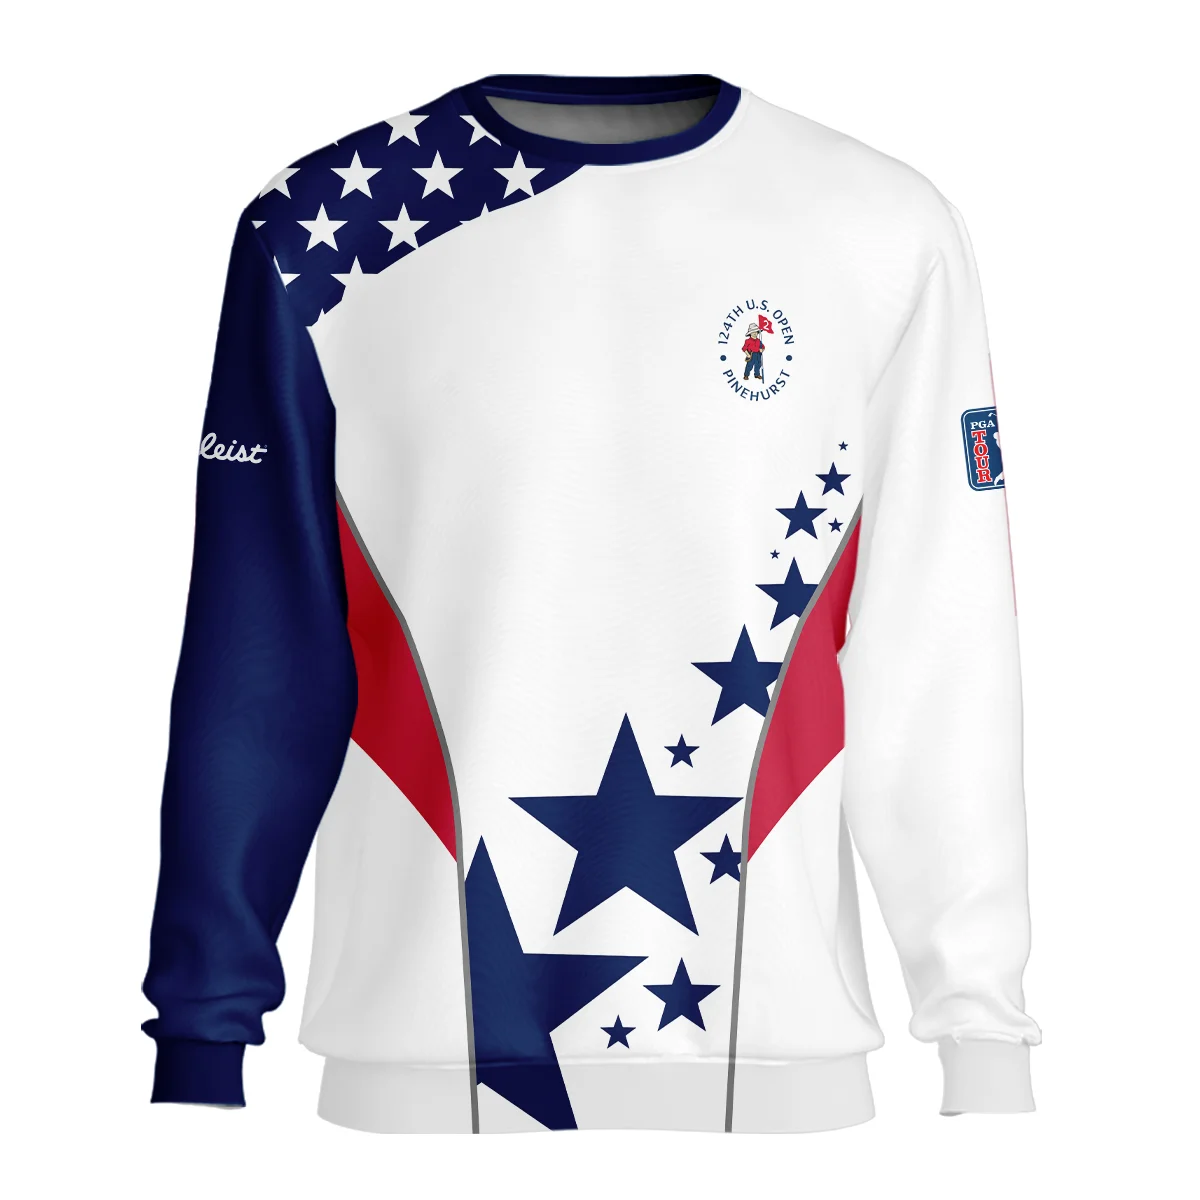 124th U.S. Open Pinehurst Titleist Stars US Flag White Blue Vneck Polo Shirt Style Classic Polo Shirt For Men